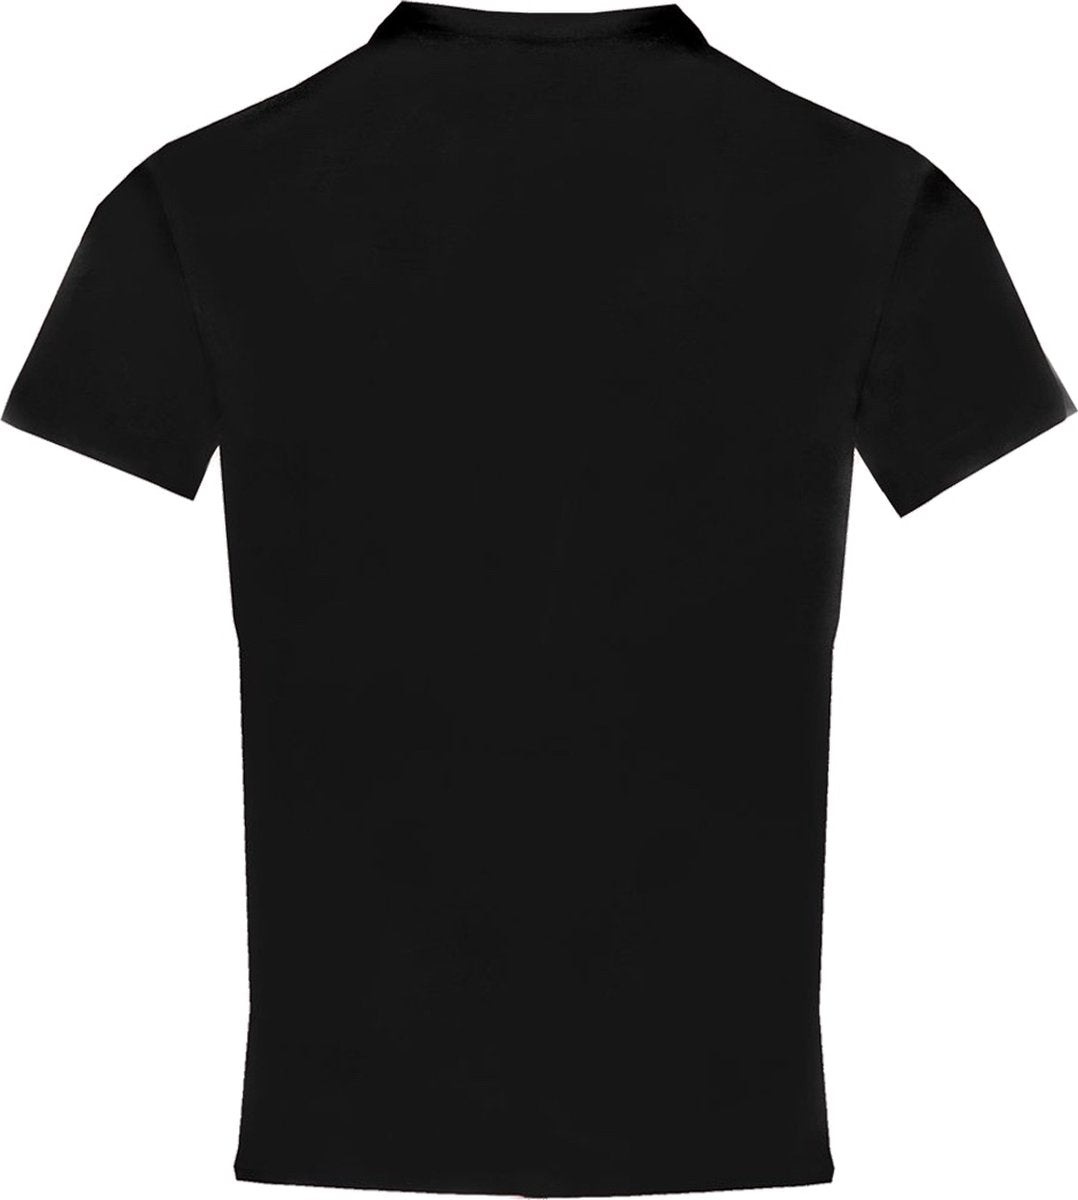 Short Sleeve Shirt - Pro Compression - Men's Undershirt